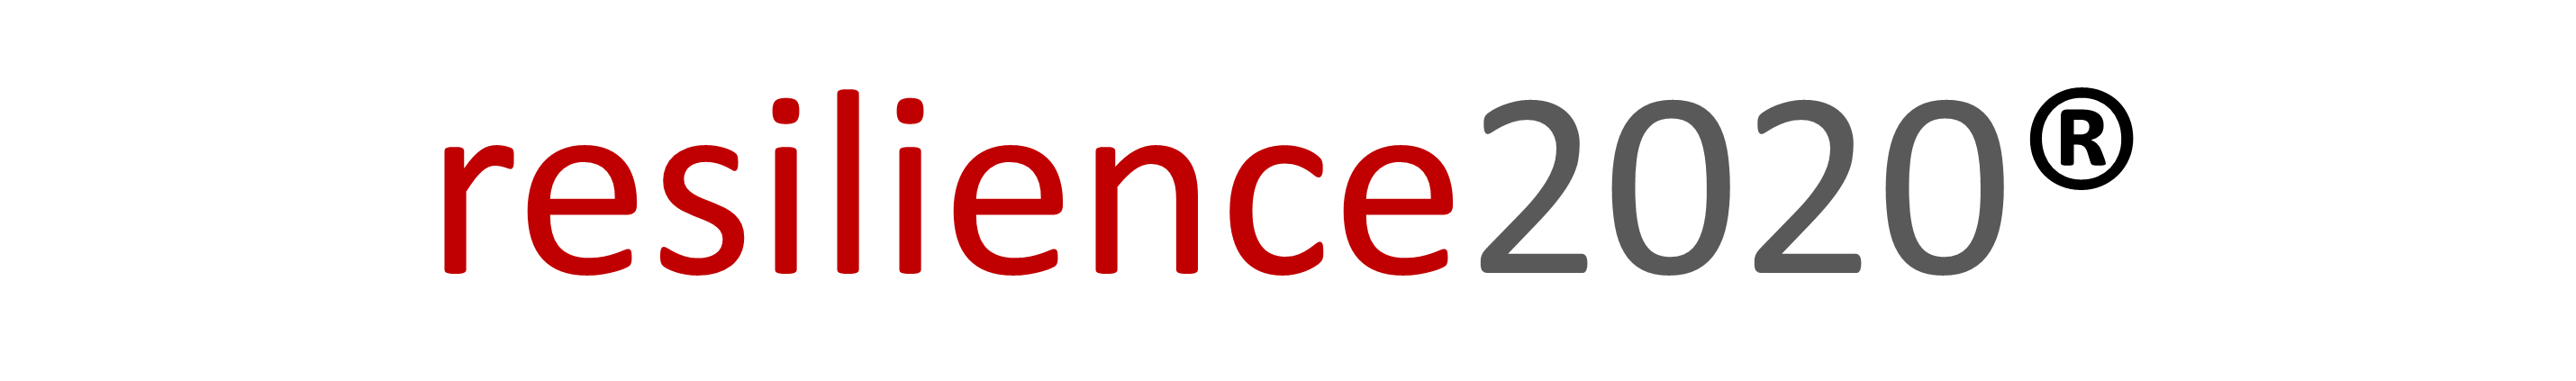 resilience2020Inc Logo